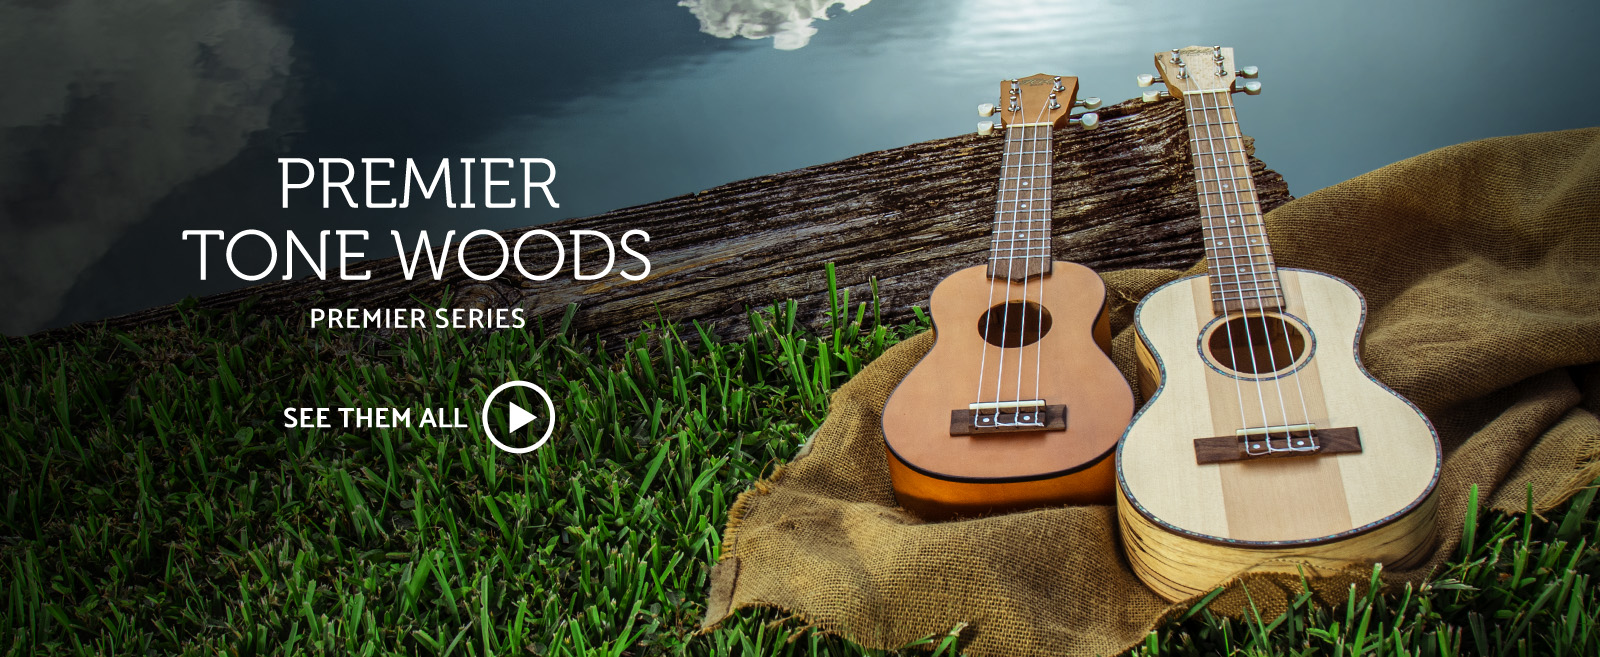 two Hilo Premier Tone Woods ukuleles lying on grass beside wood plank